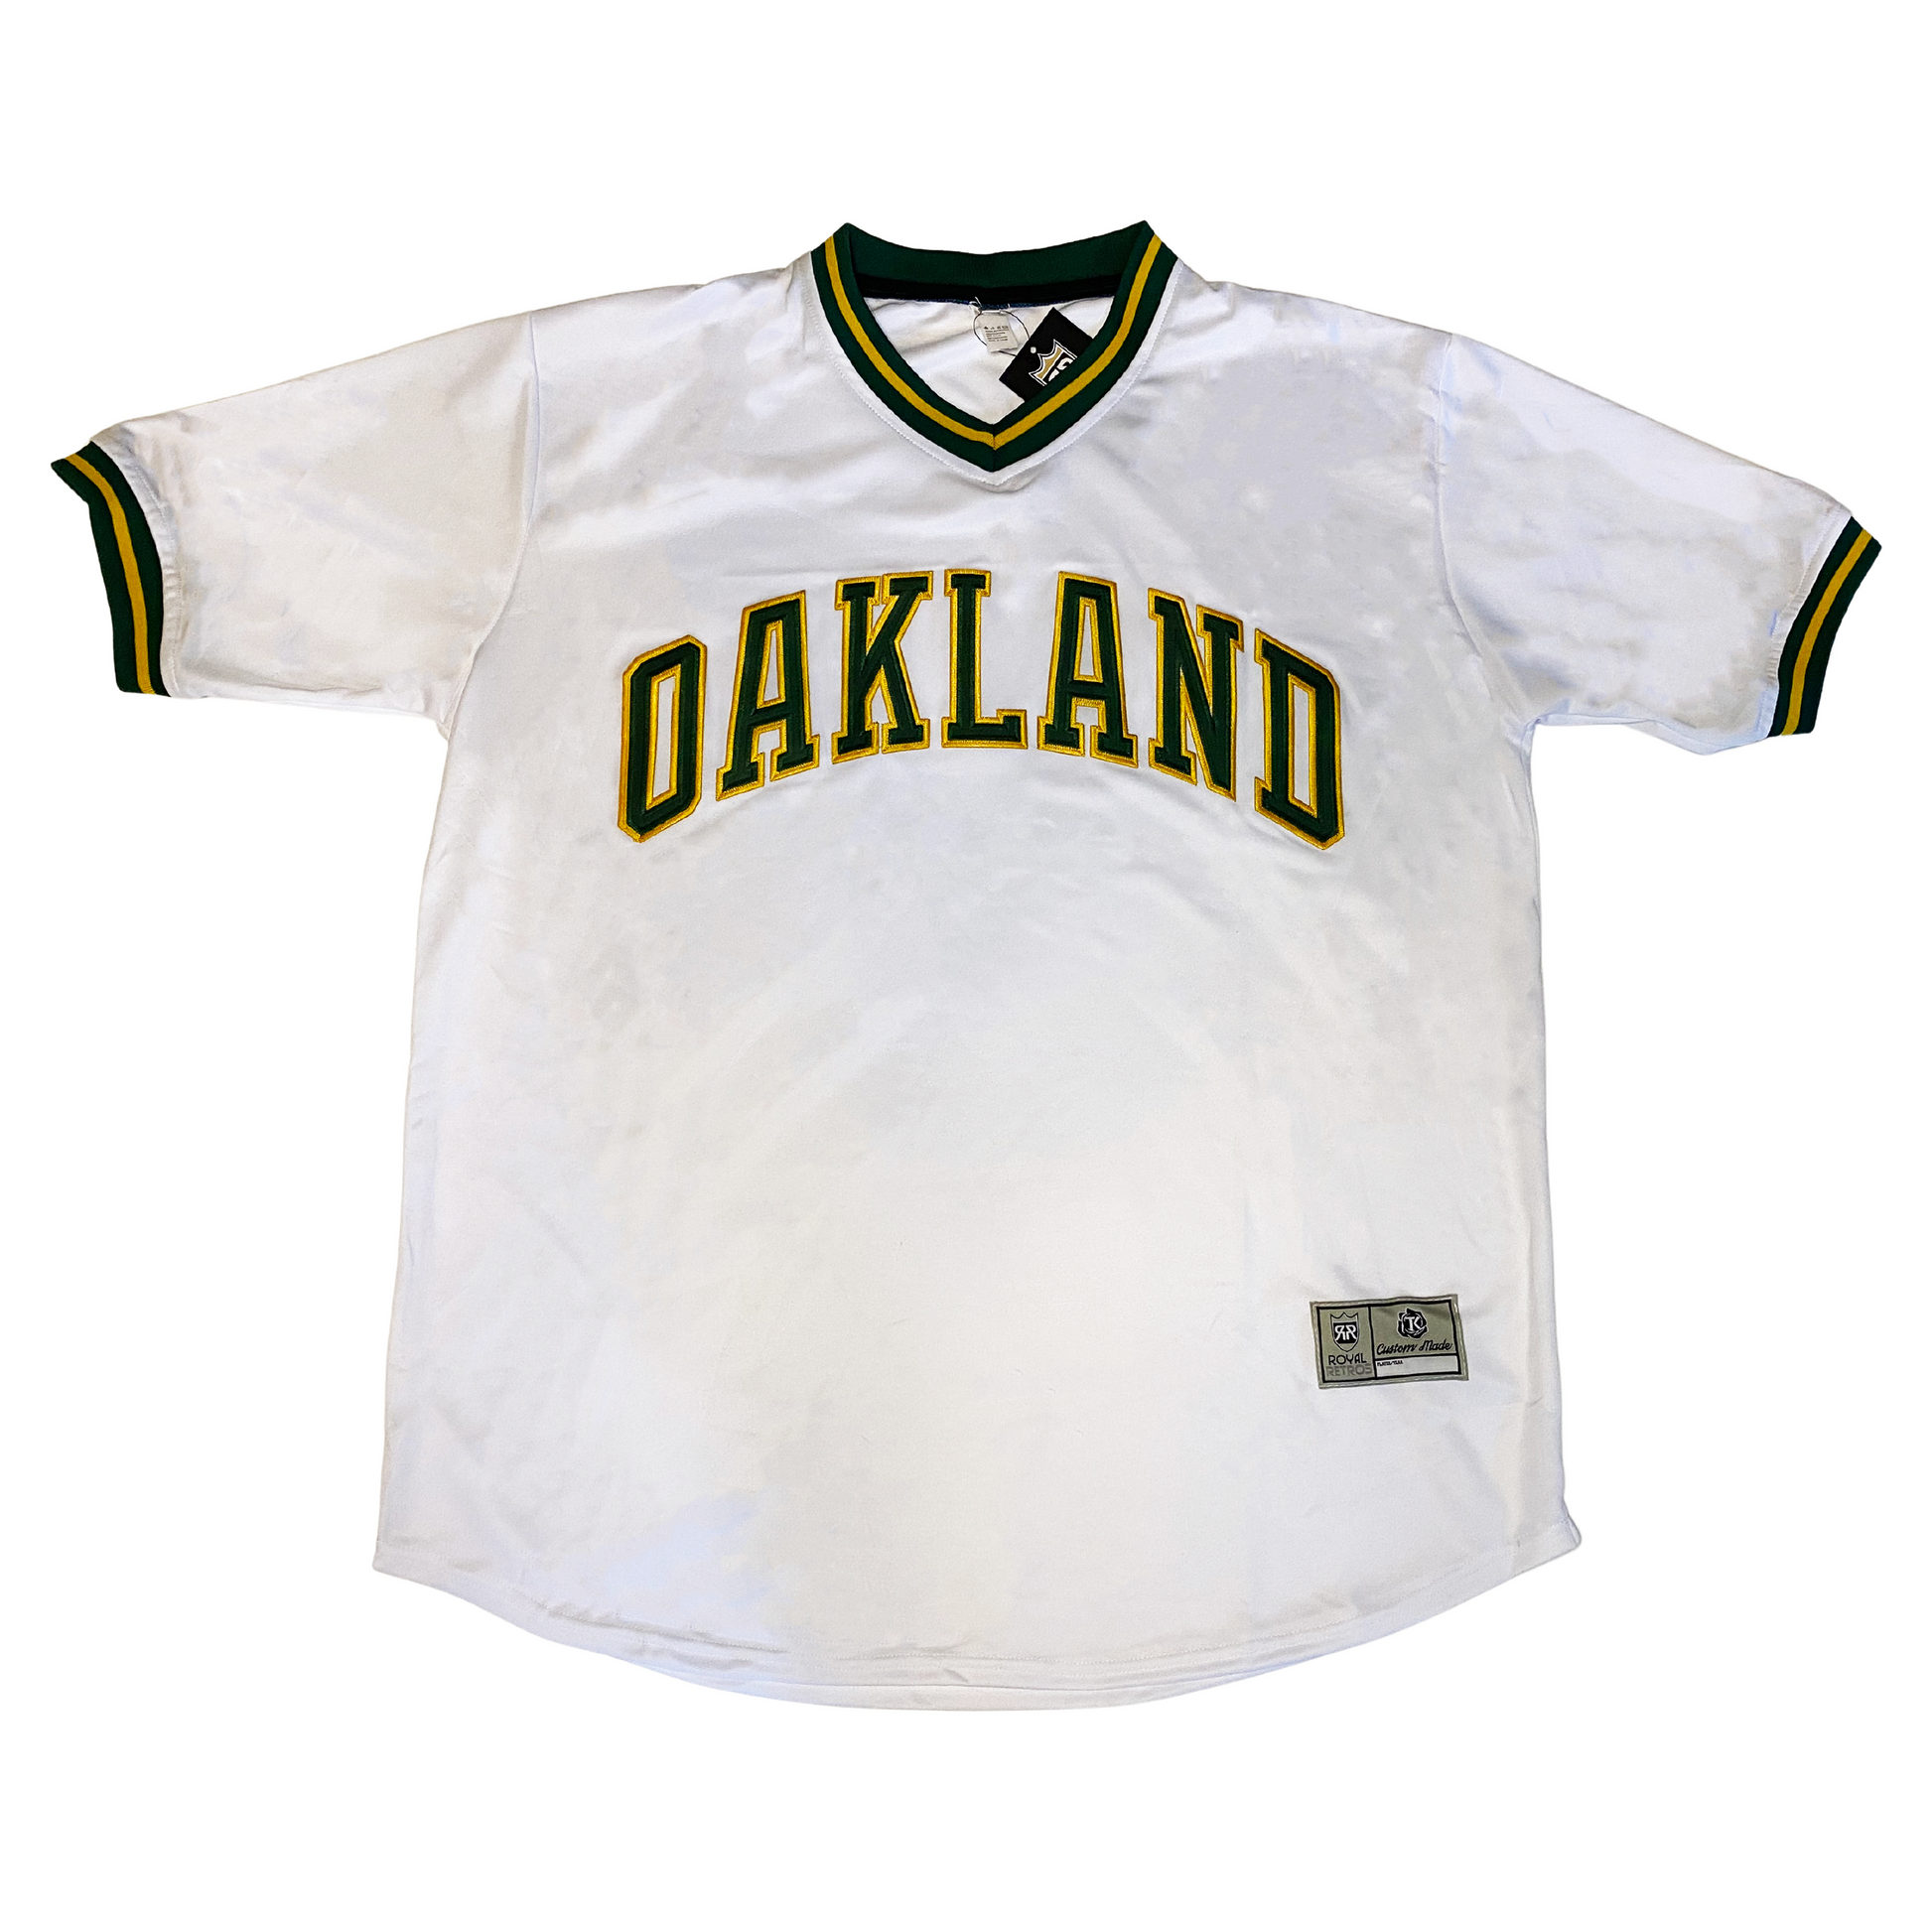 oakland a's retro jersey